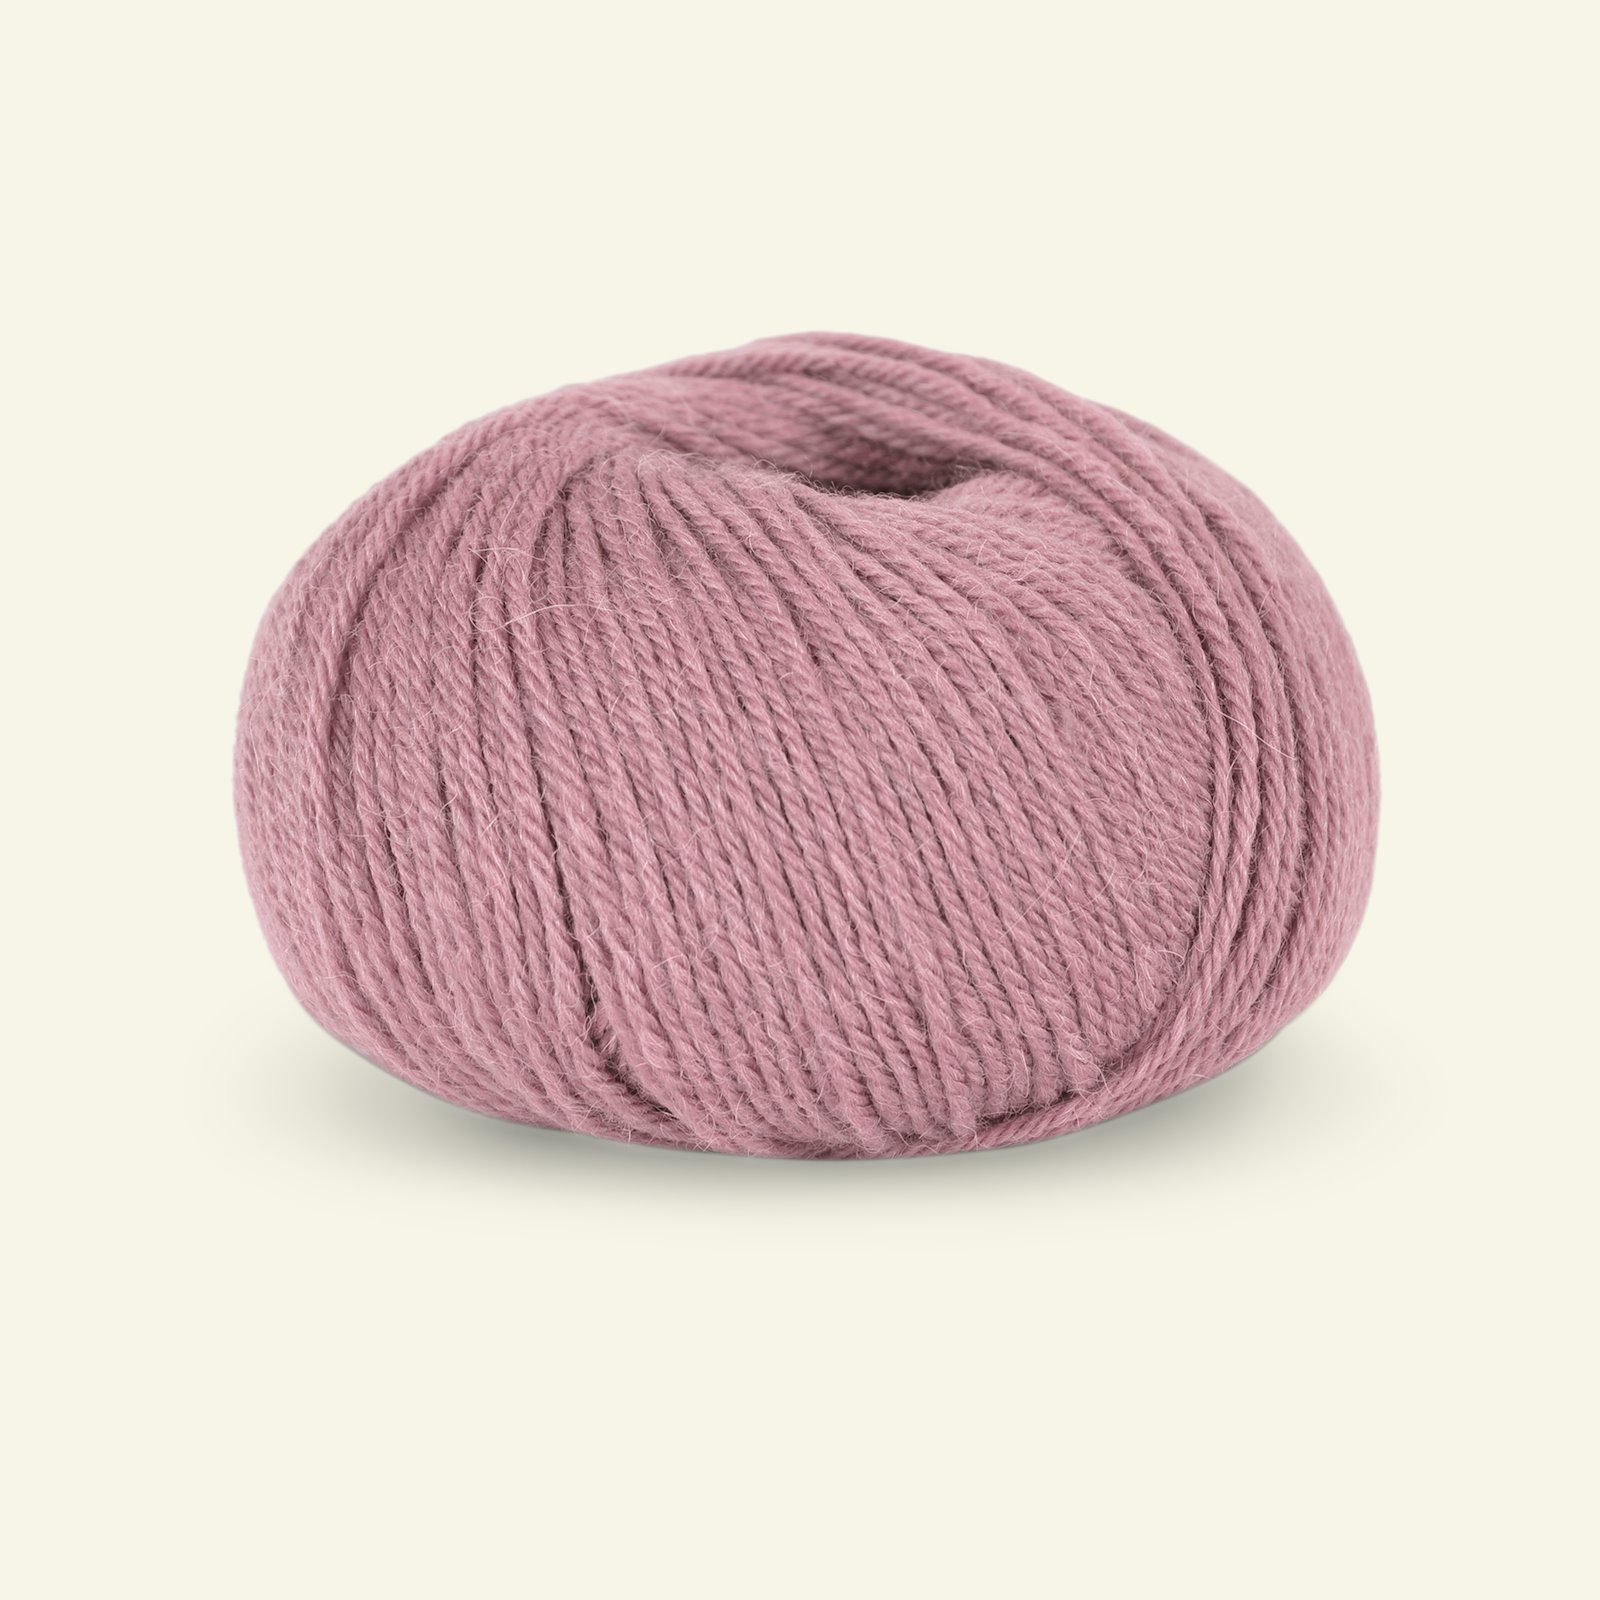 Du Store Alpakka, alpaca merino mixed yarn "Sterk", dark dusty rose (899) 90000693_pack_b